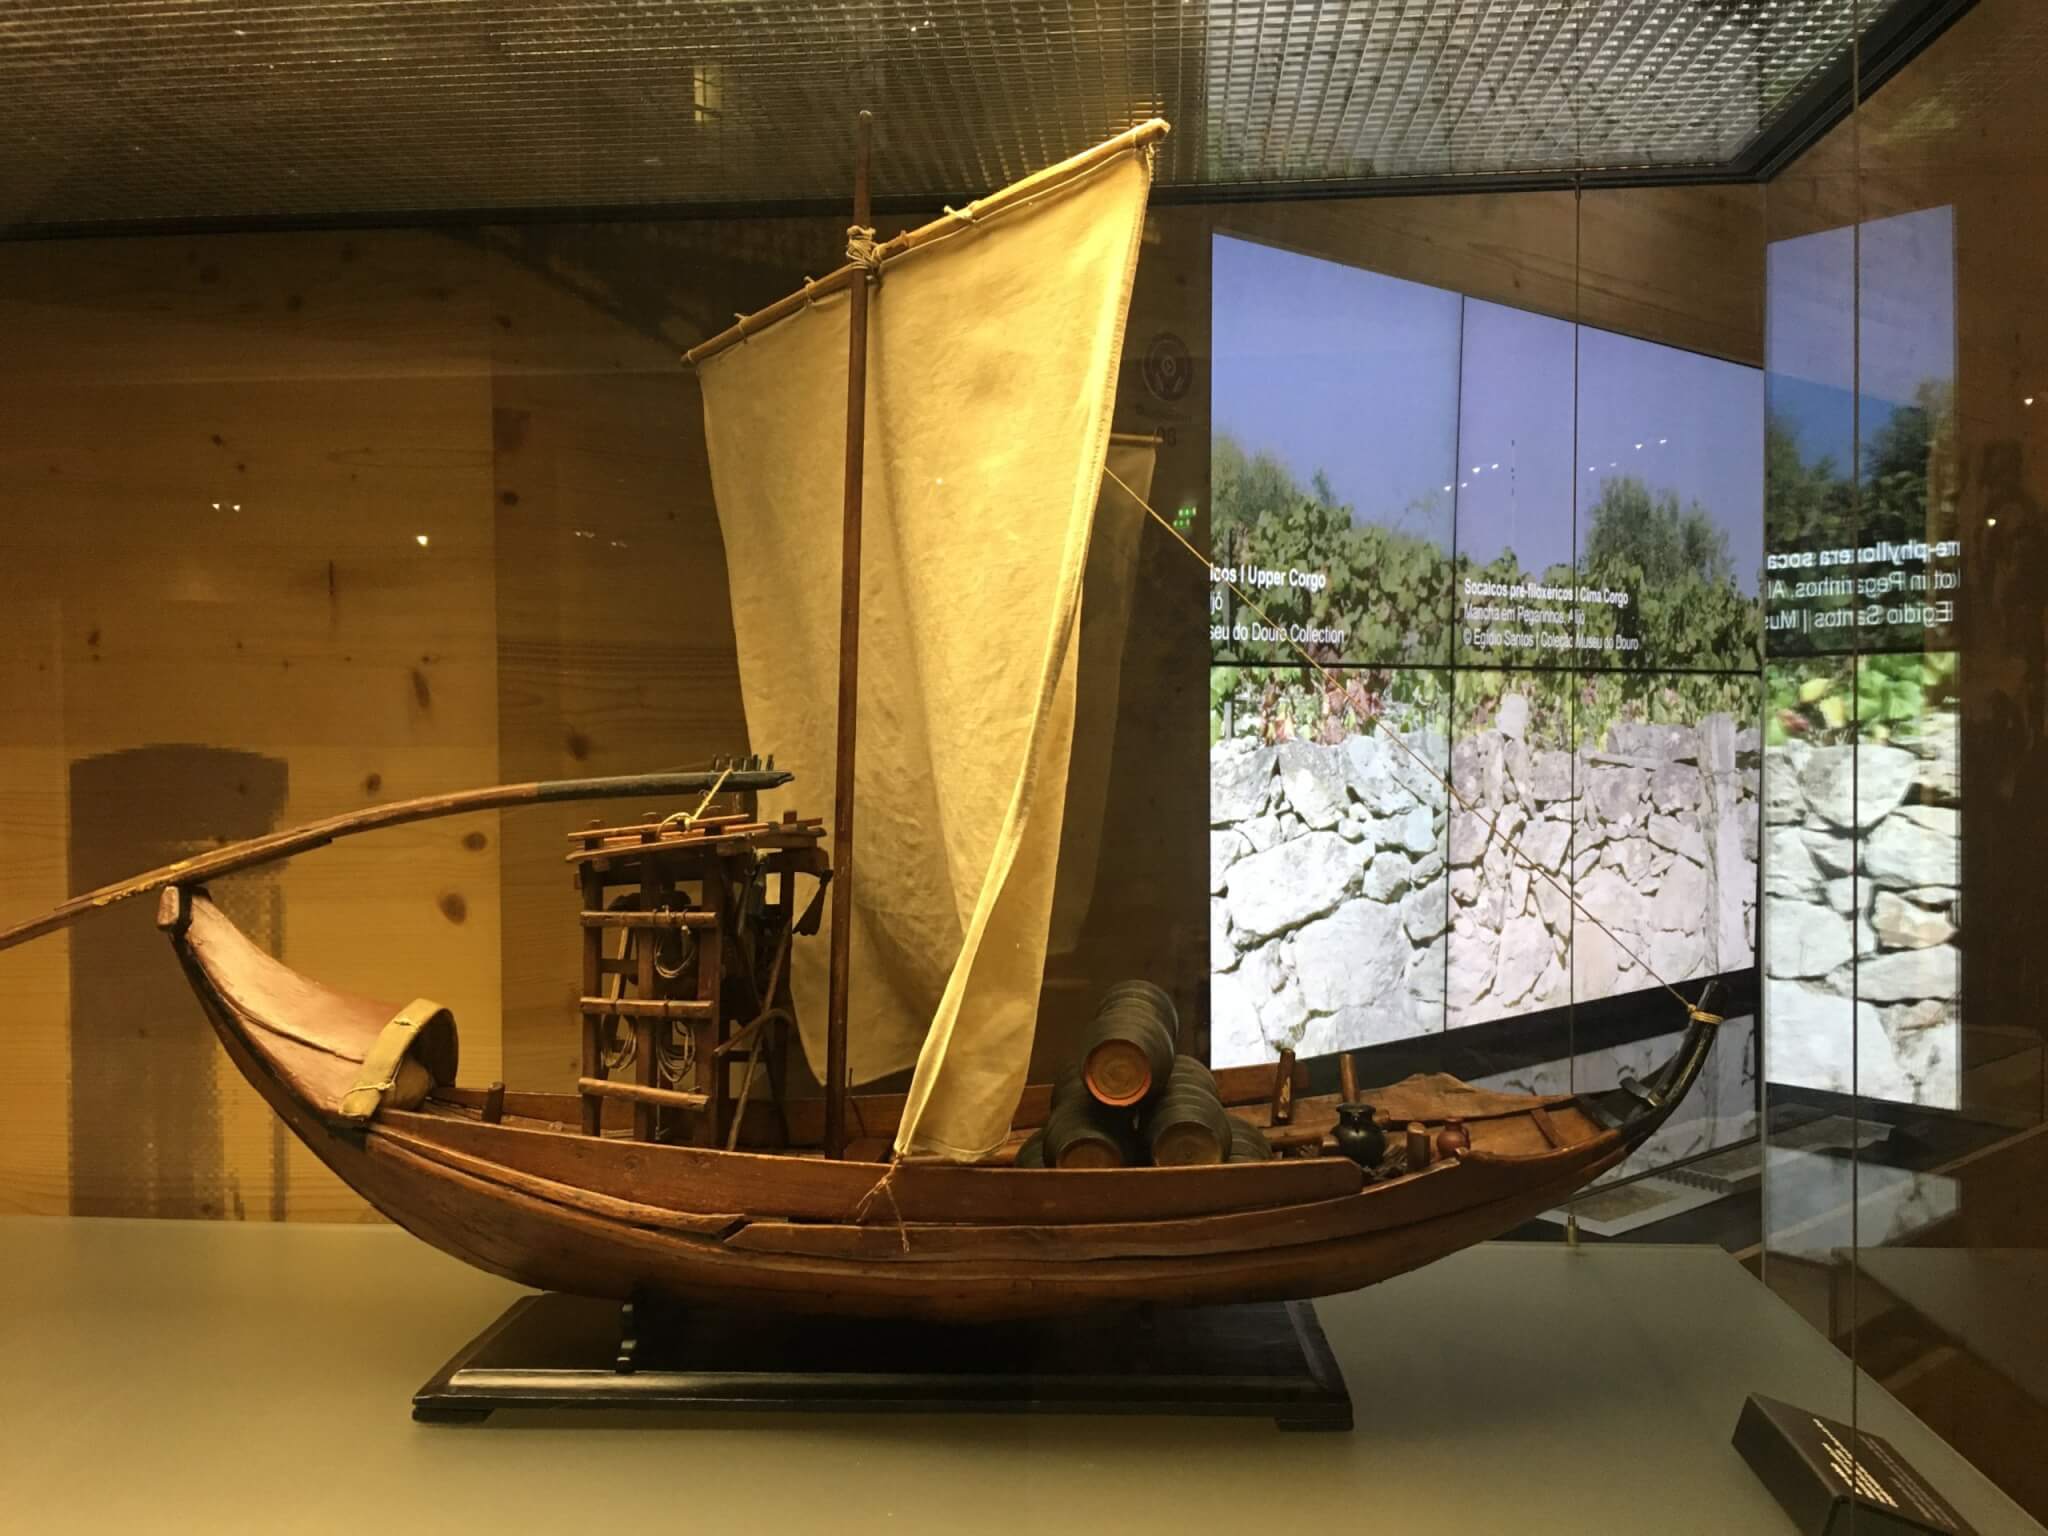 miniatura de barco rabelo exposta no museu do douro